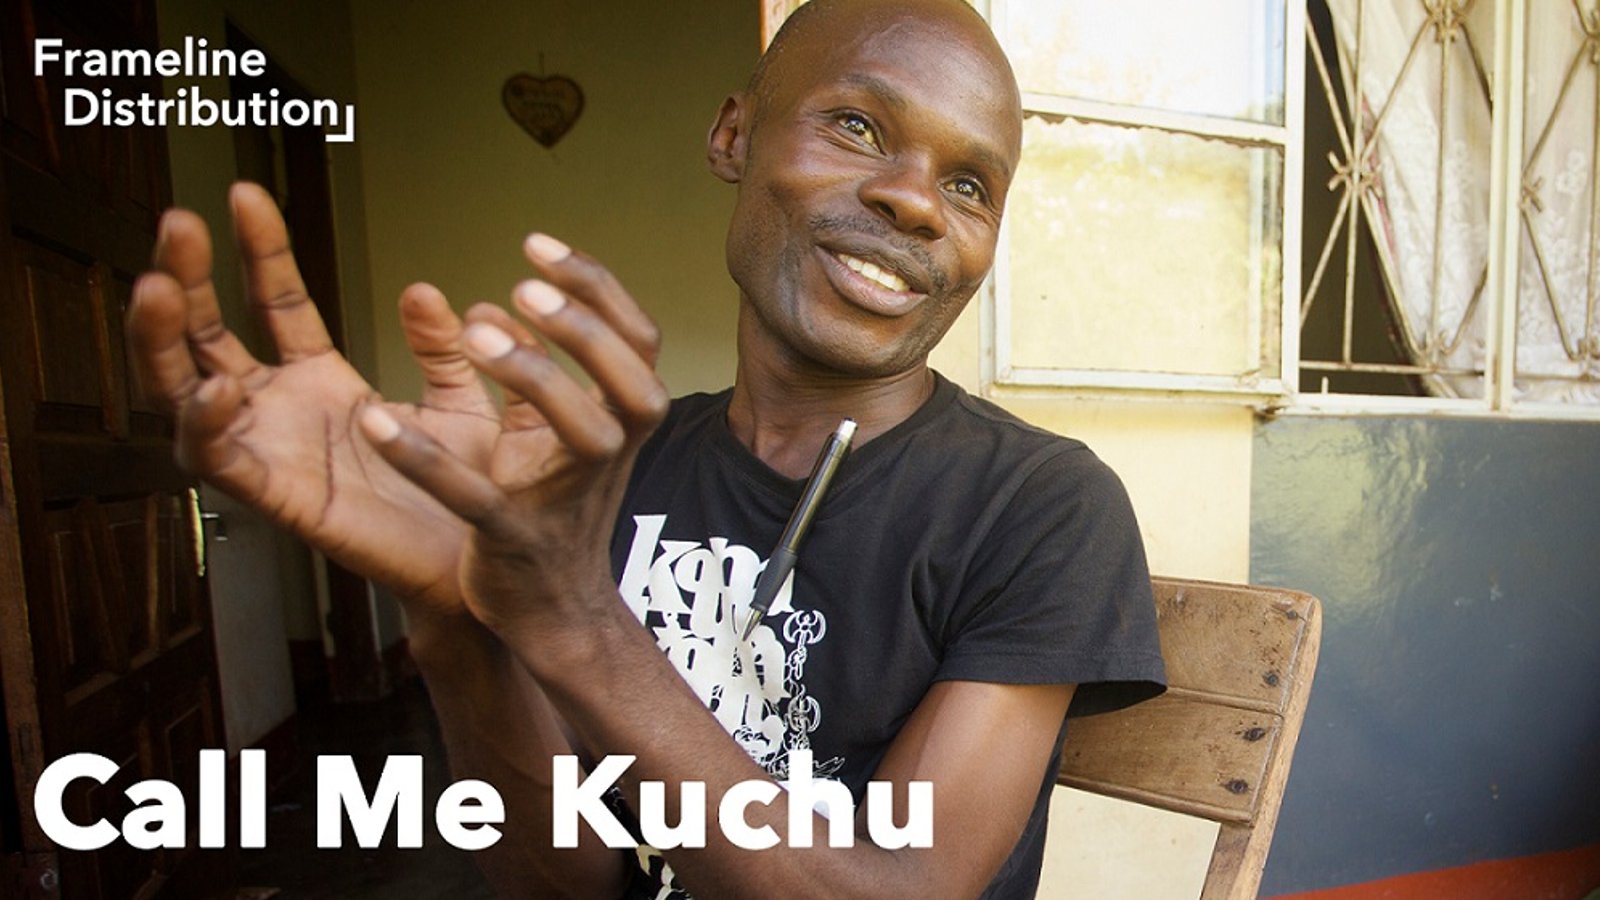 Call Me Kuchu - Fighting Homophobia in Uganda